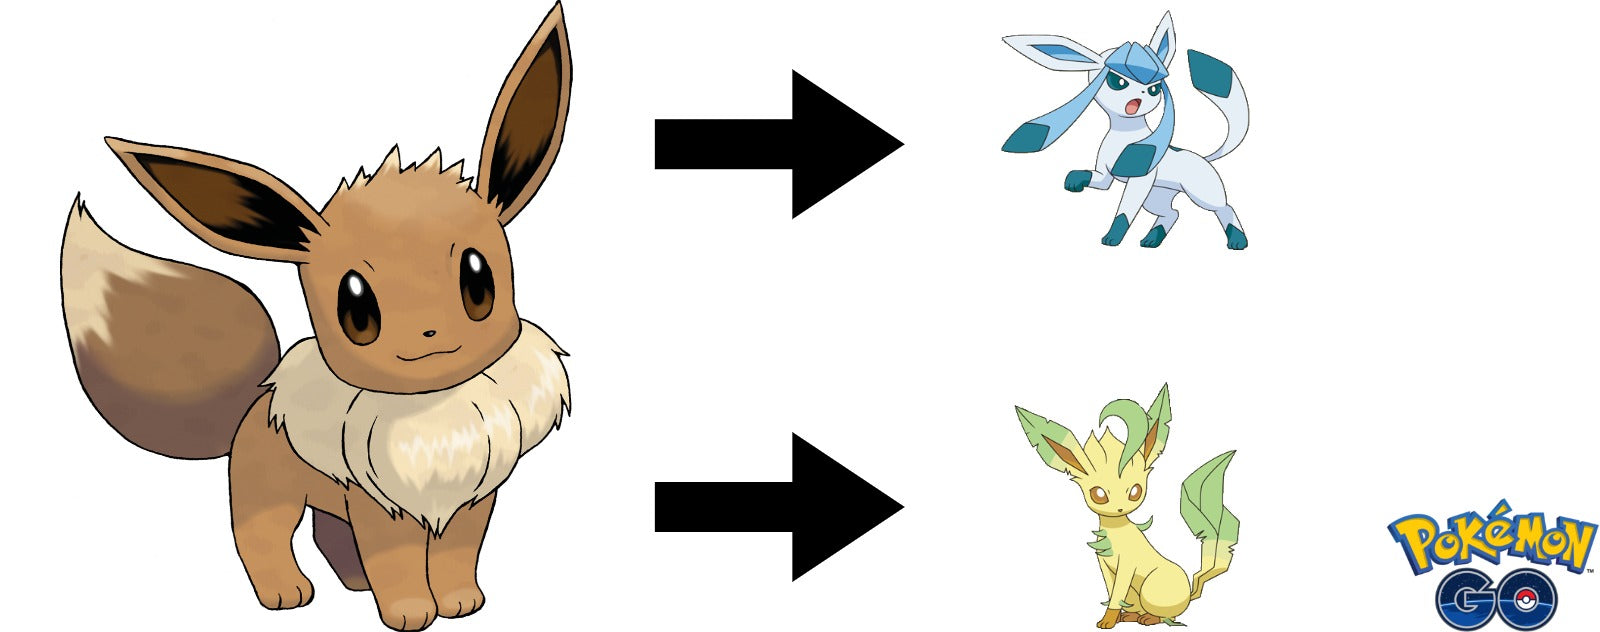 Pokemon Go Eeveelutions: How to evolve Eevee into Leafeon, Glaceon, Umbreon